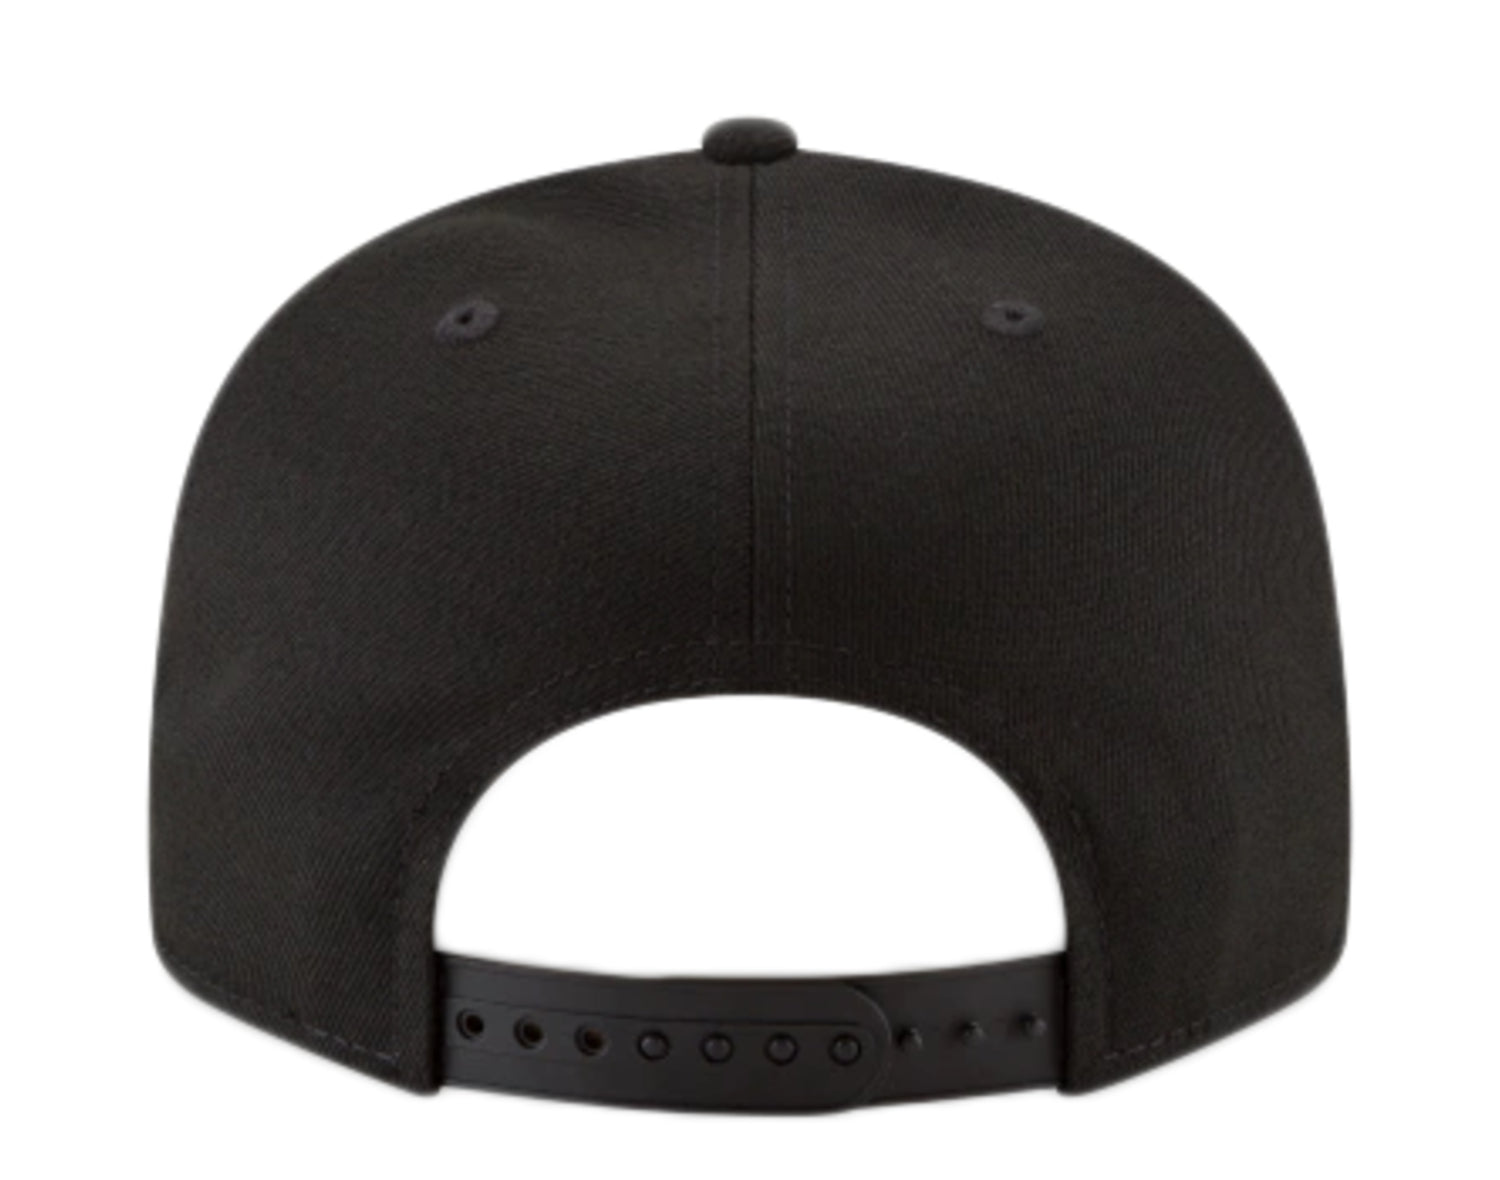 New Era 9Fifty MLB Chicago White Sox Basic Snapback Hat